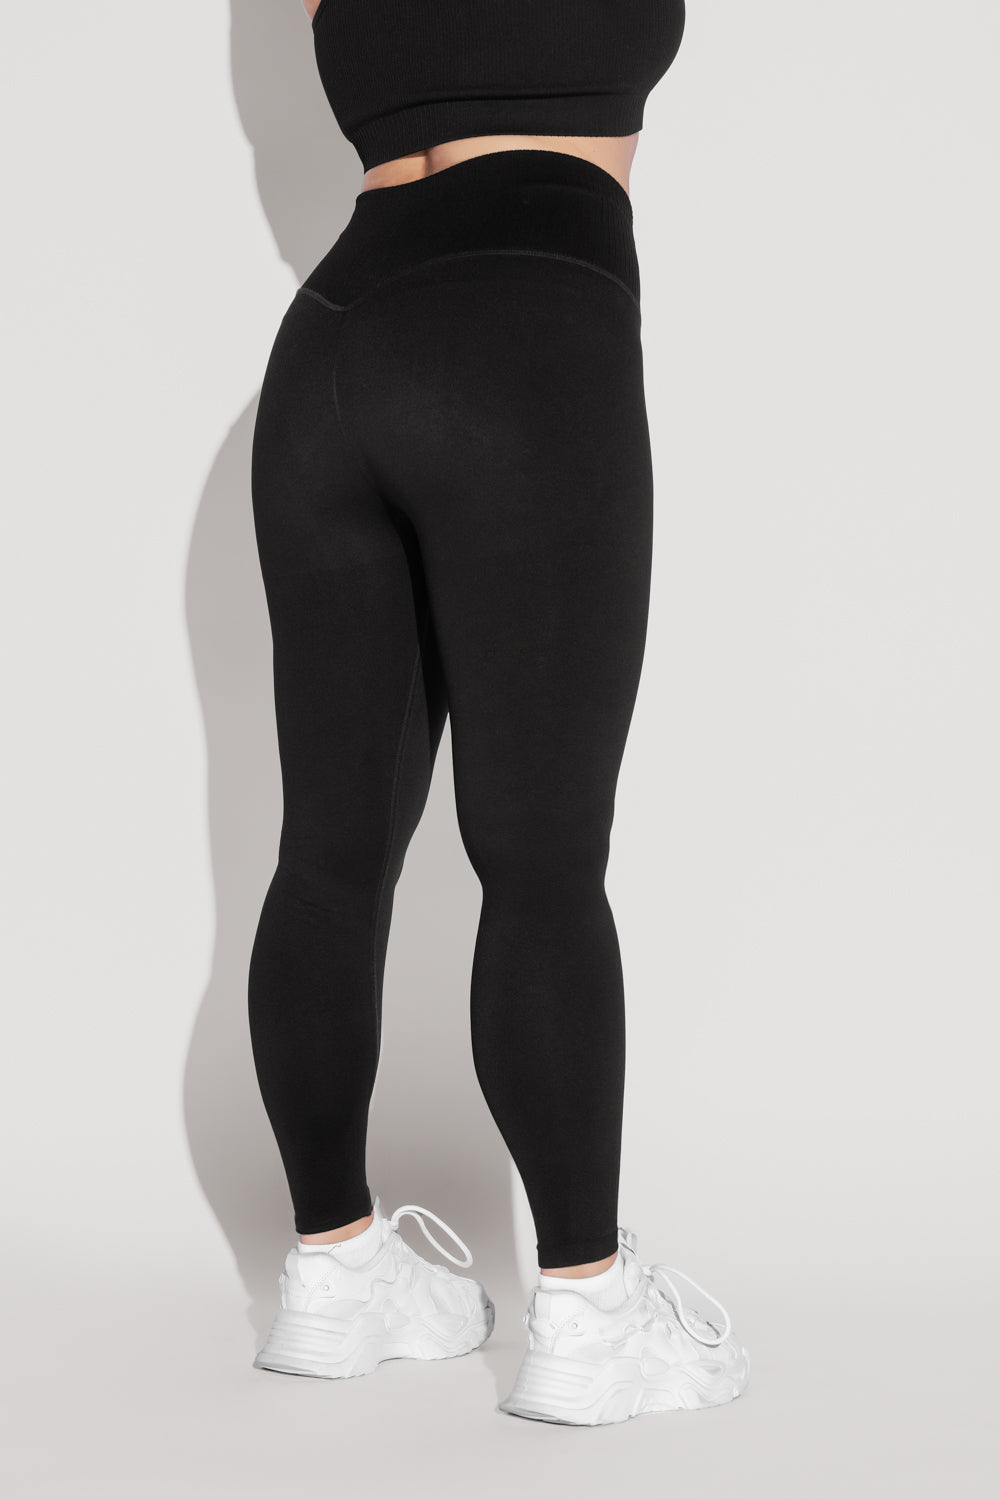 Gymshark, Pants & Jumpsuits, Gymshark Leggings Black Size Large